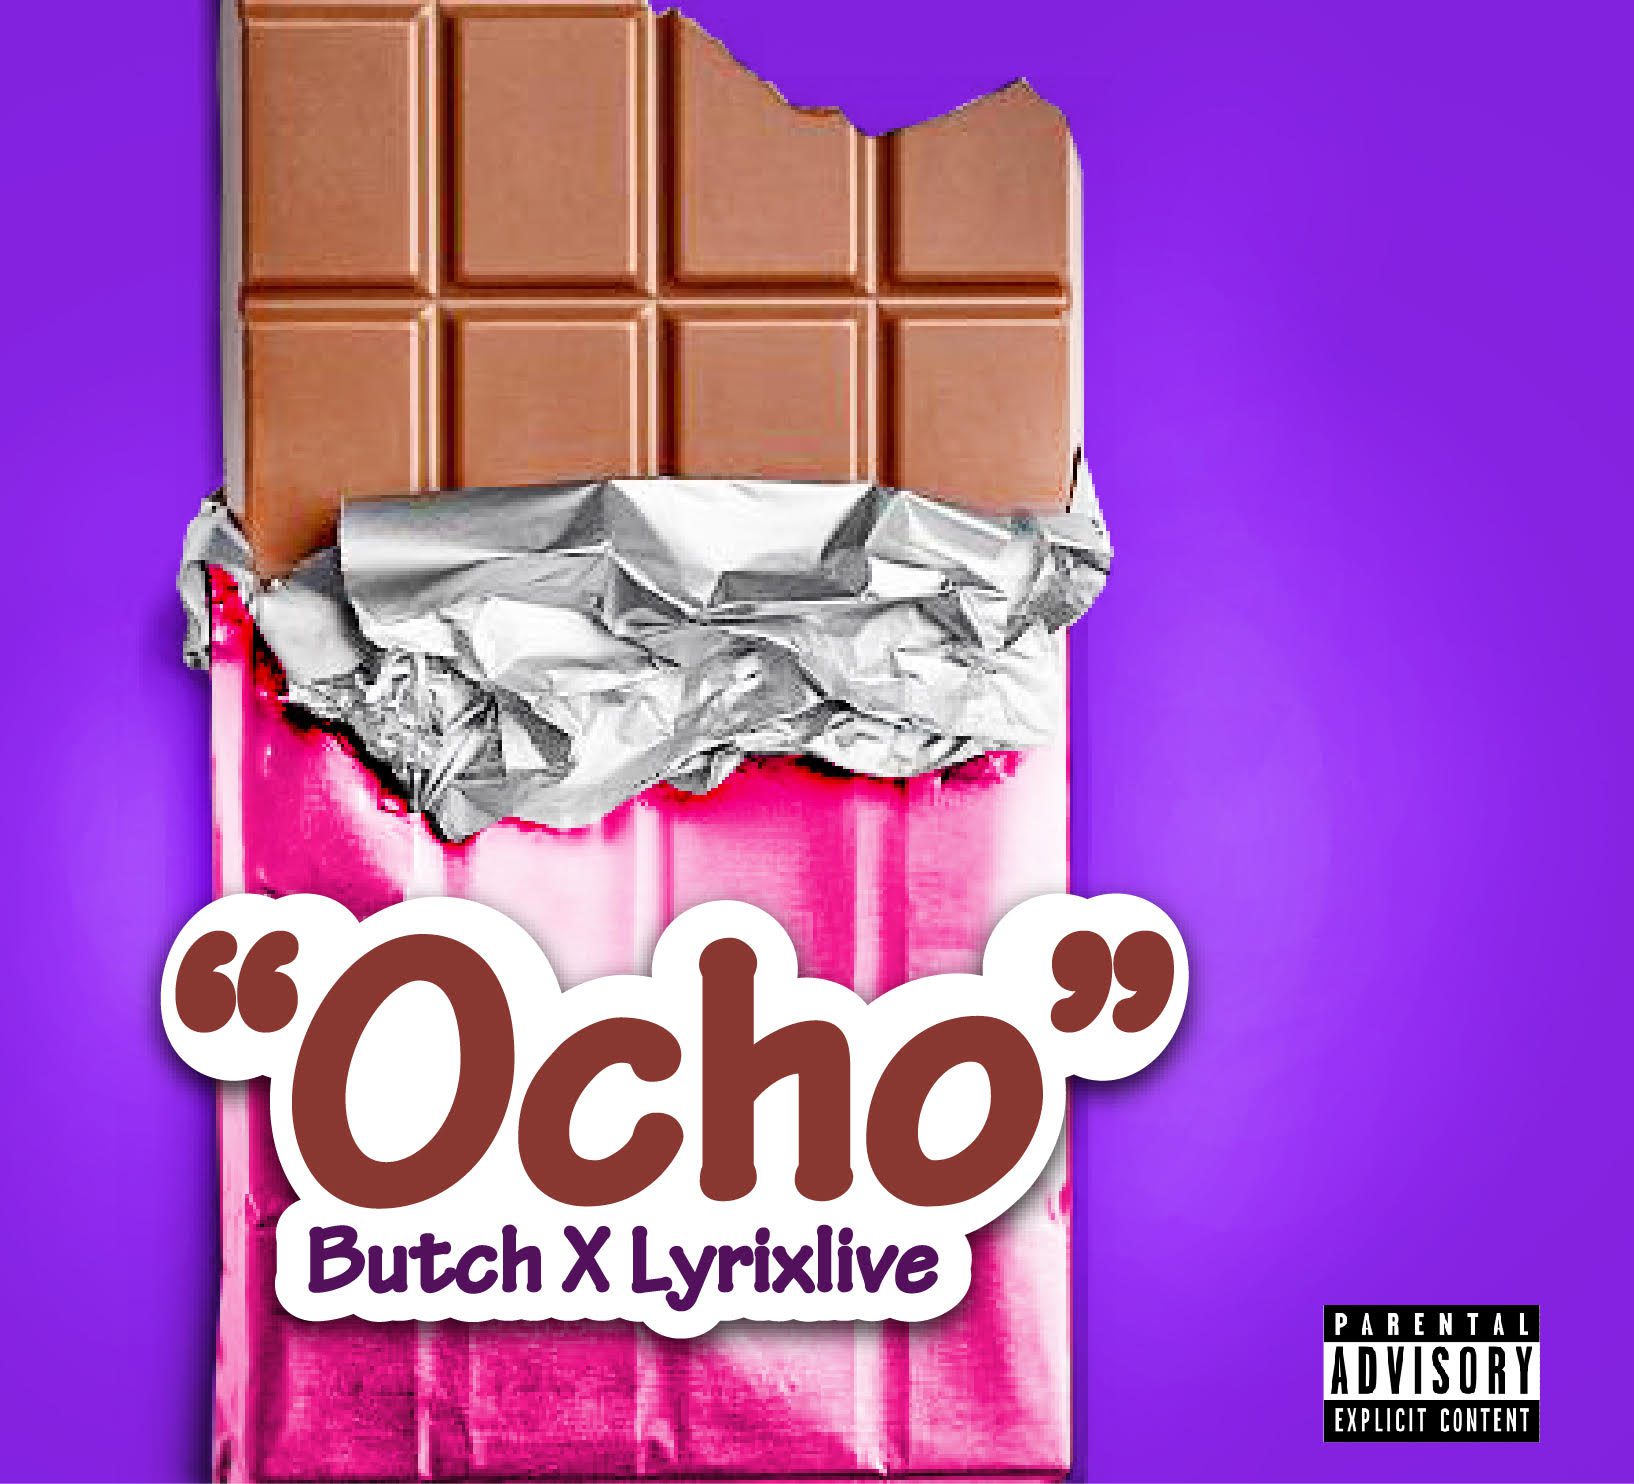 Audio/Video: Butch x Lyrixlive – Ocho